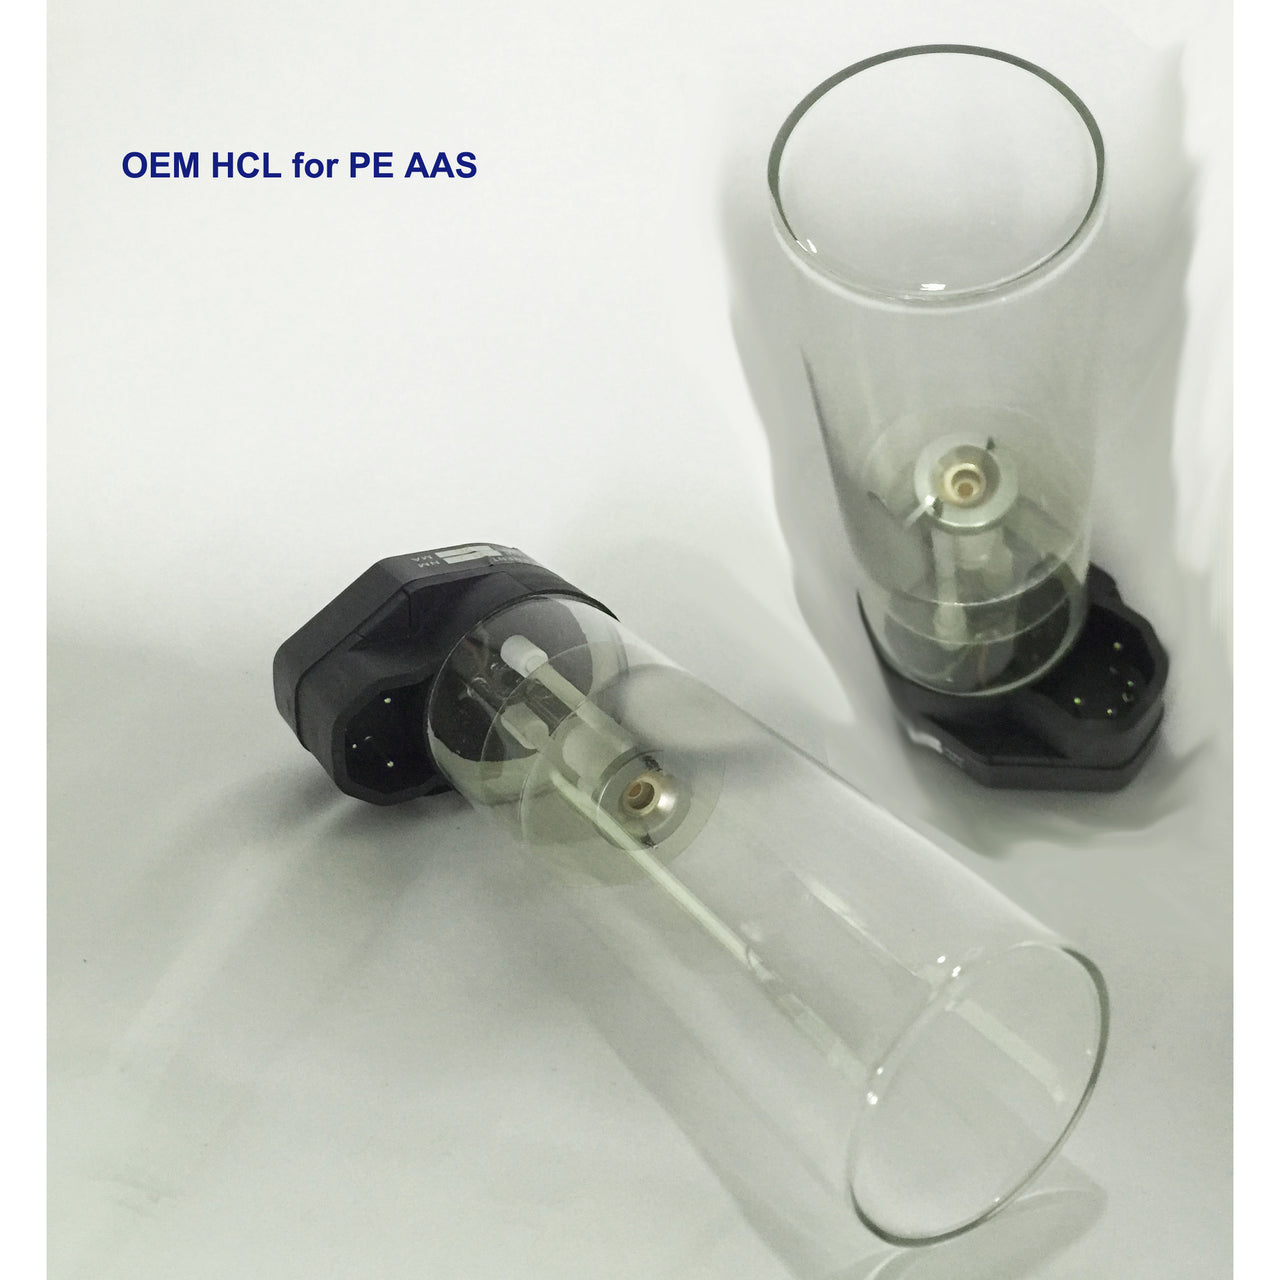 Hollow Cathode Lamp, Arsenic - As